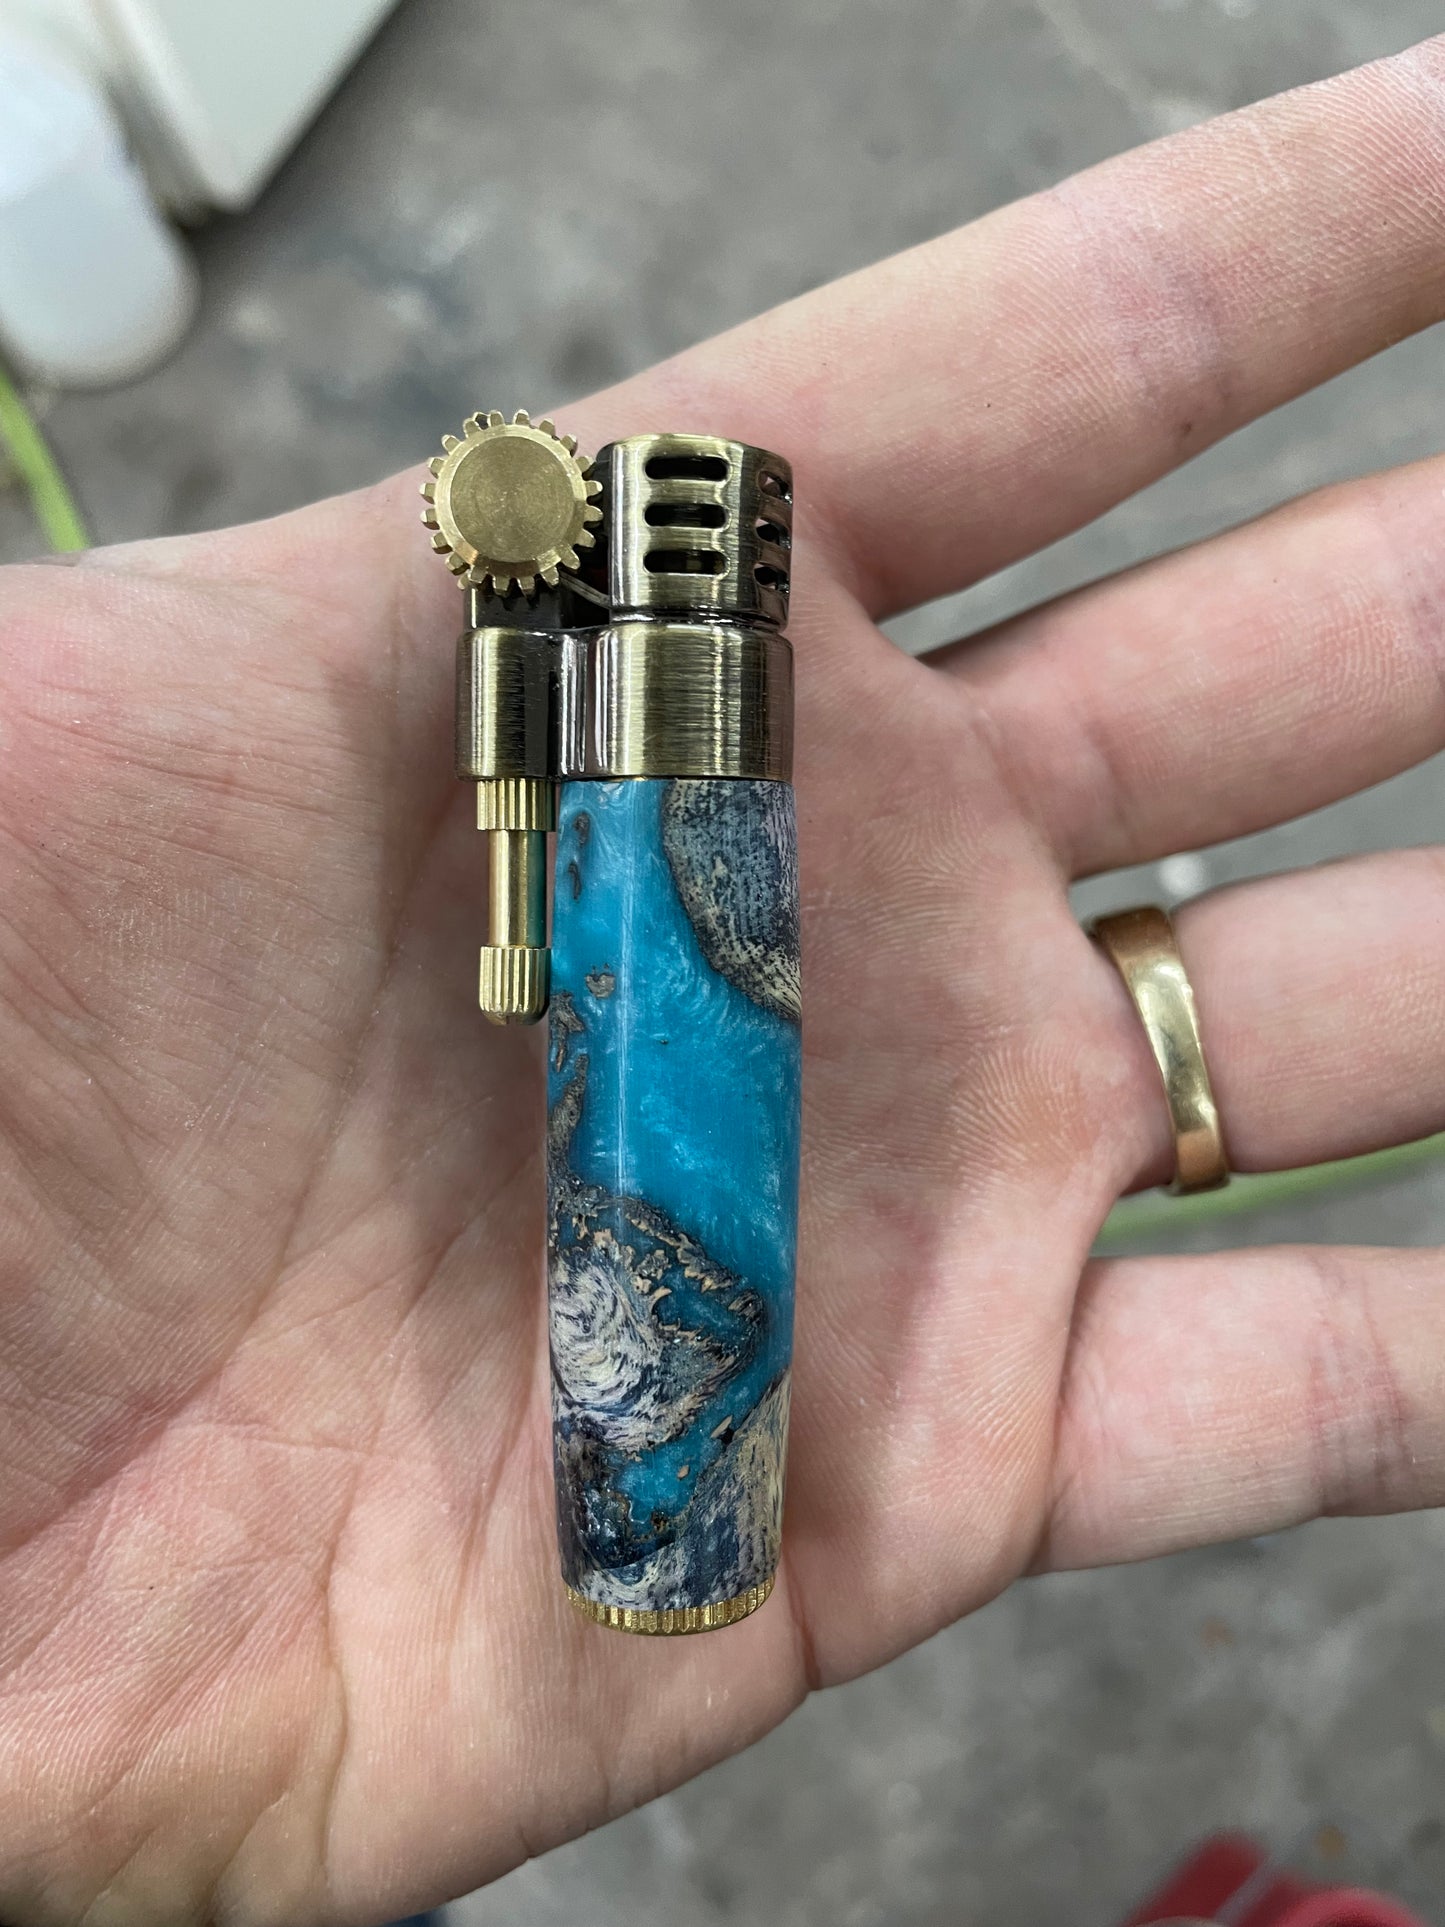 Steampunk lighter kit